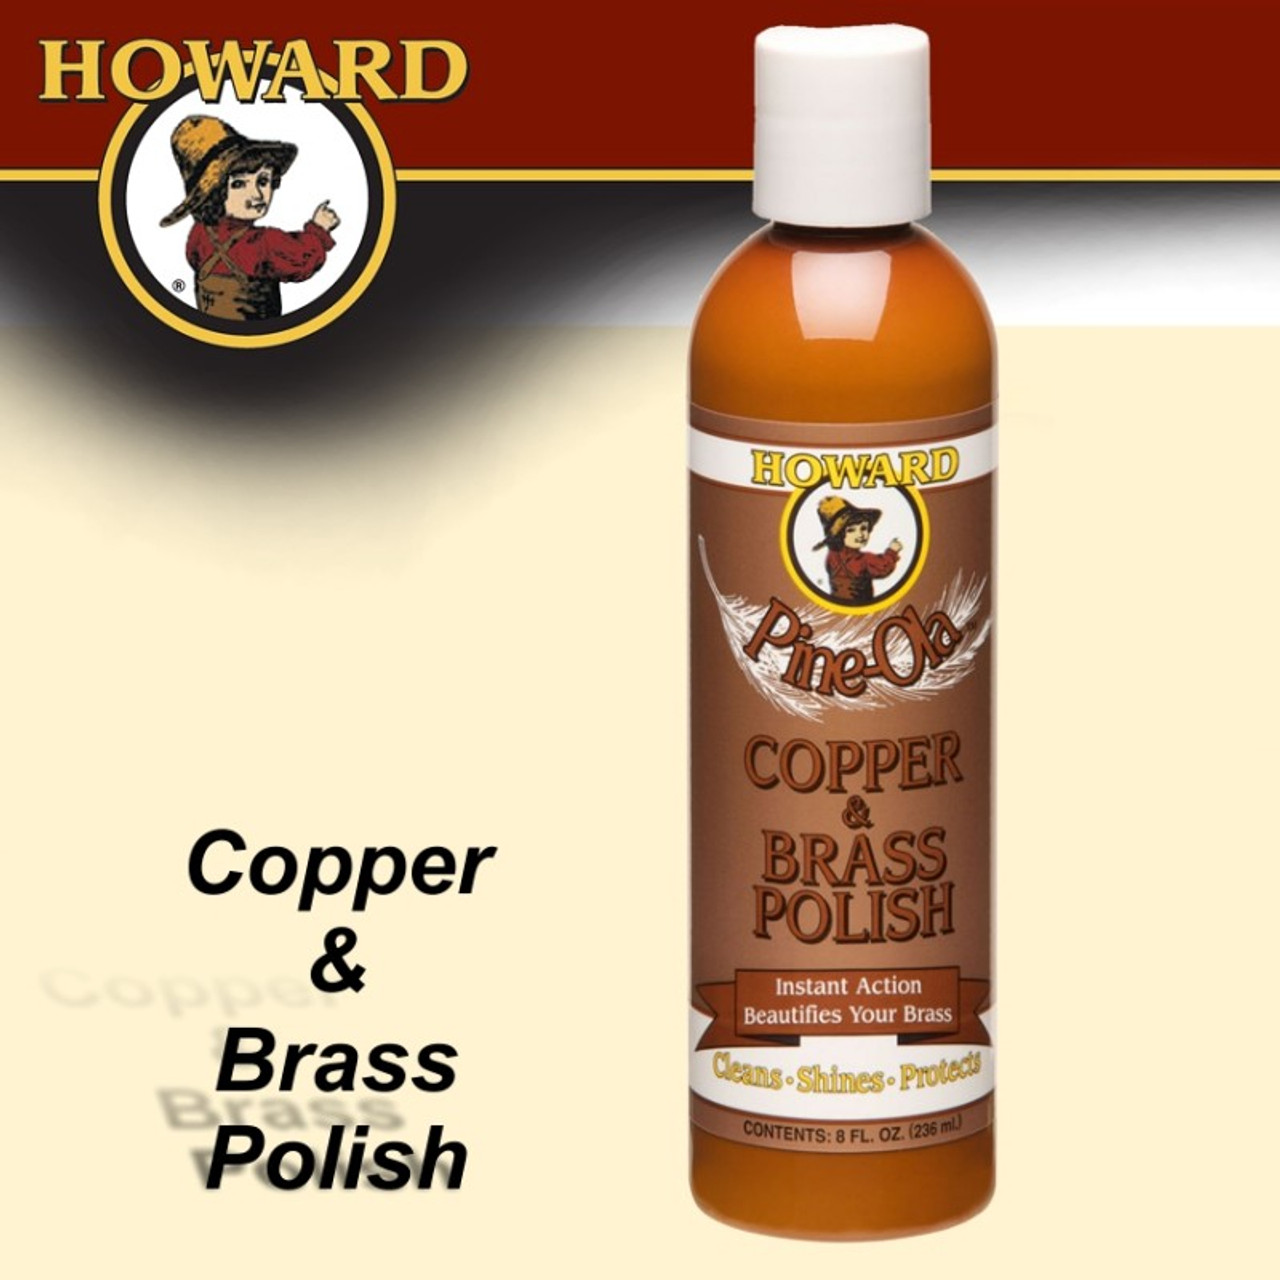 Pine-Ola Copper & Brass Polish